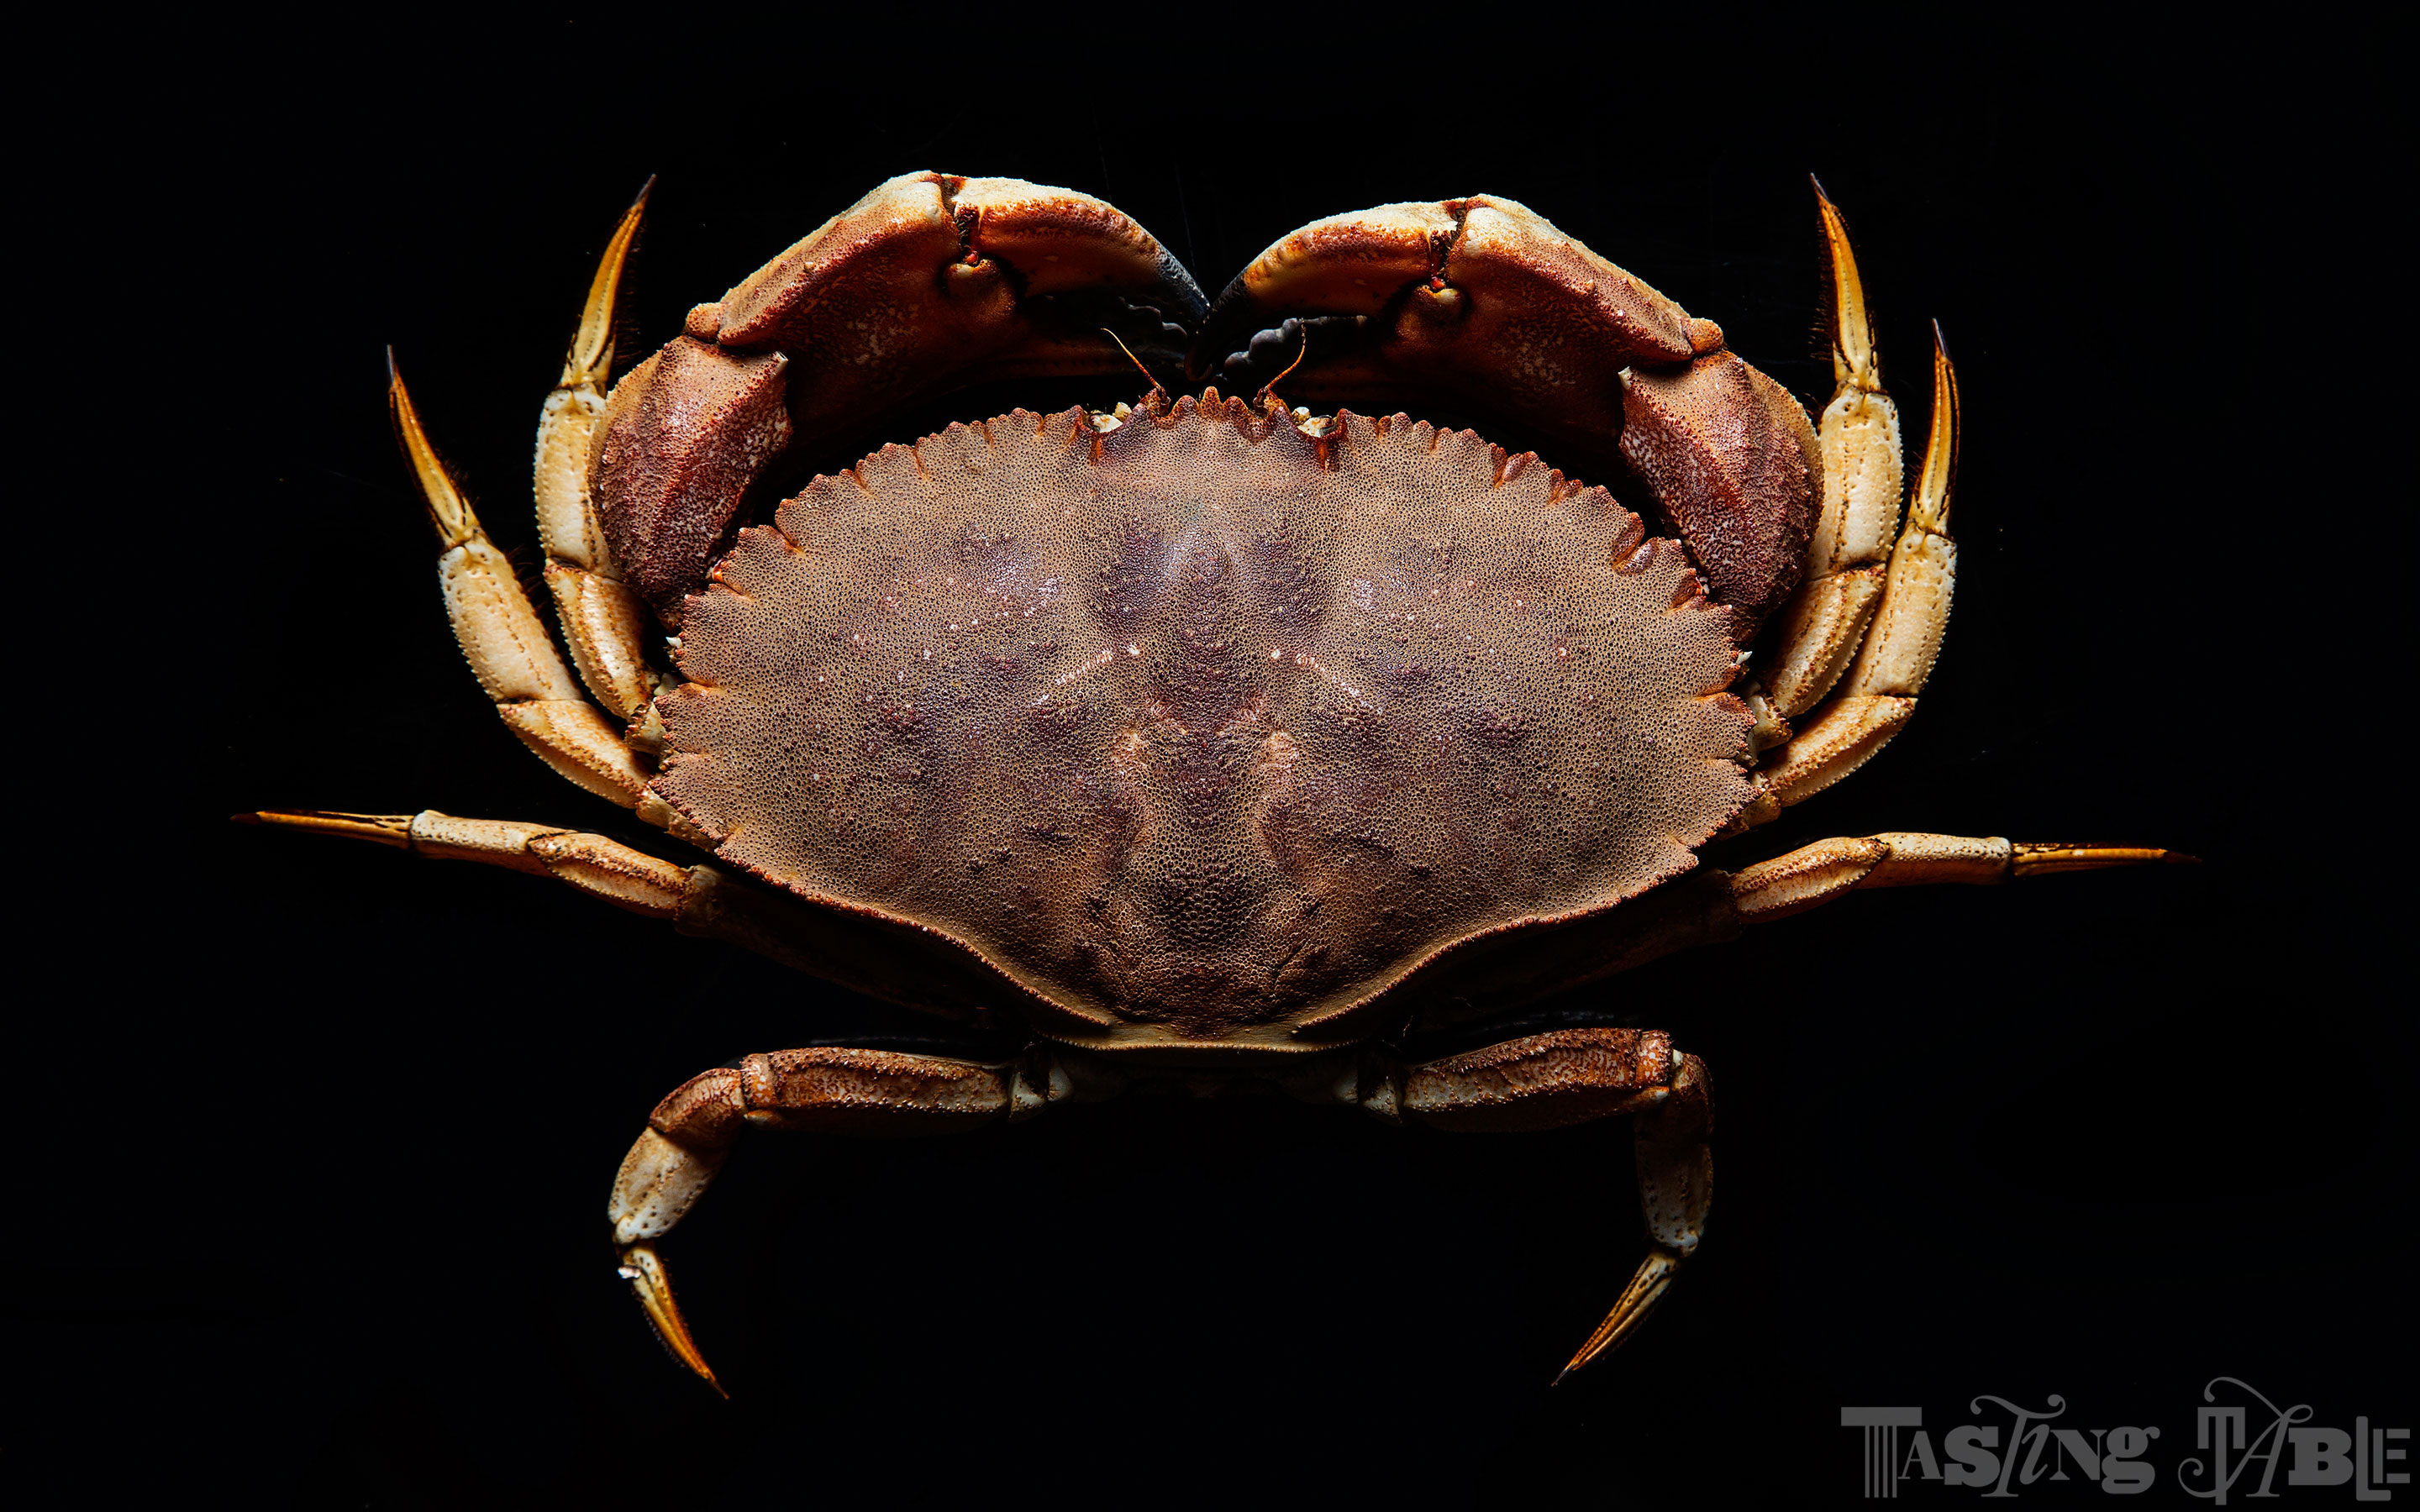 crab wallpaper, crab, rock crab, cancridae, freshwater crab, decapoda, dungeness crab, invertebrate, crustacean, organism, ocypodidae